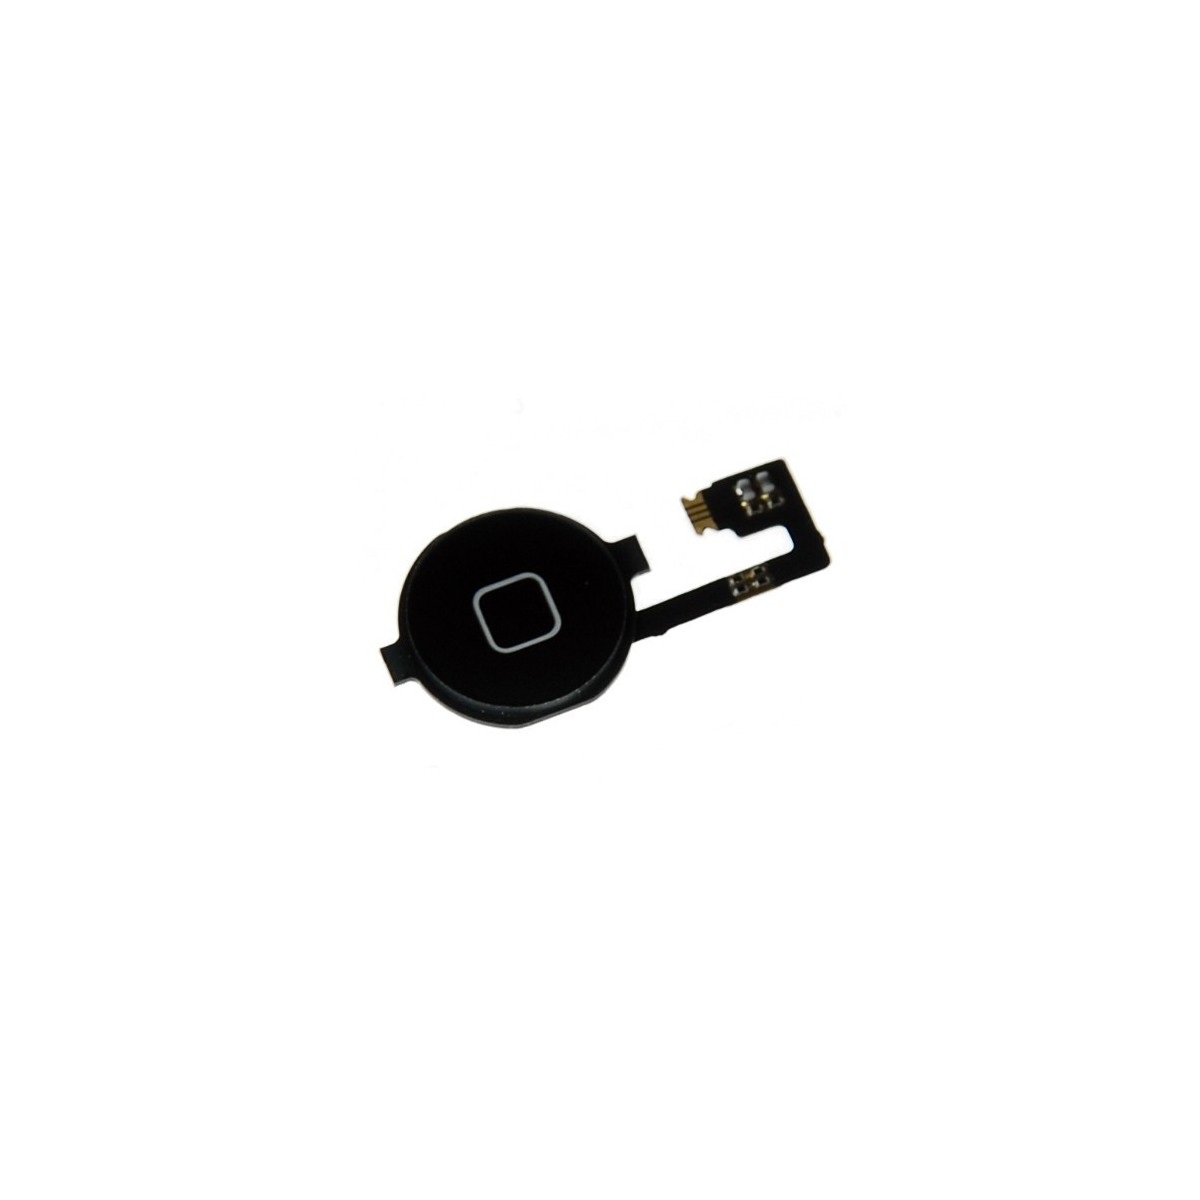 Home Button Flexkabel für iPhone 4G Flex Kabel Cable